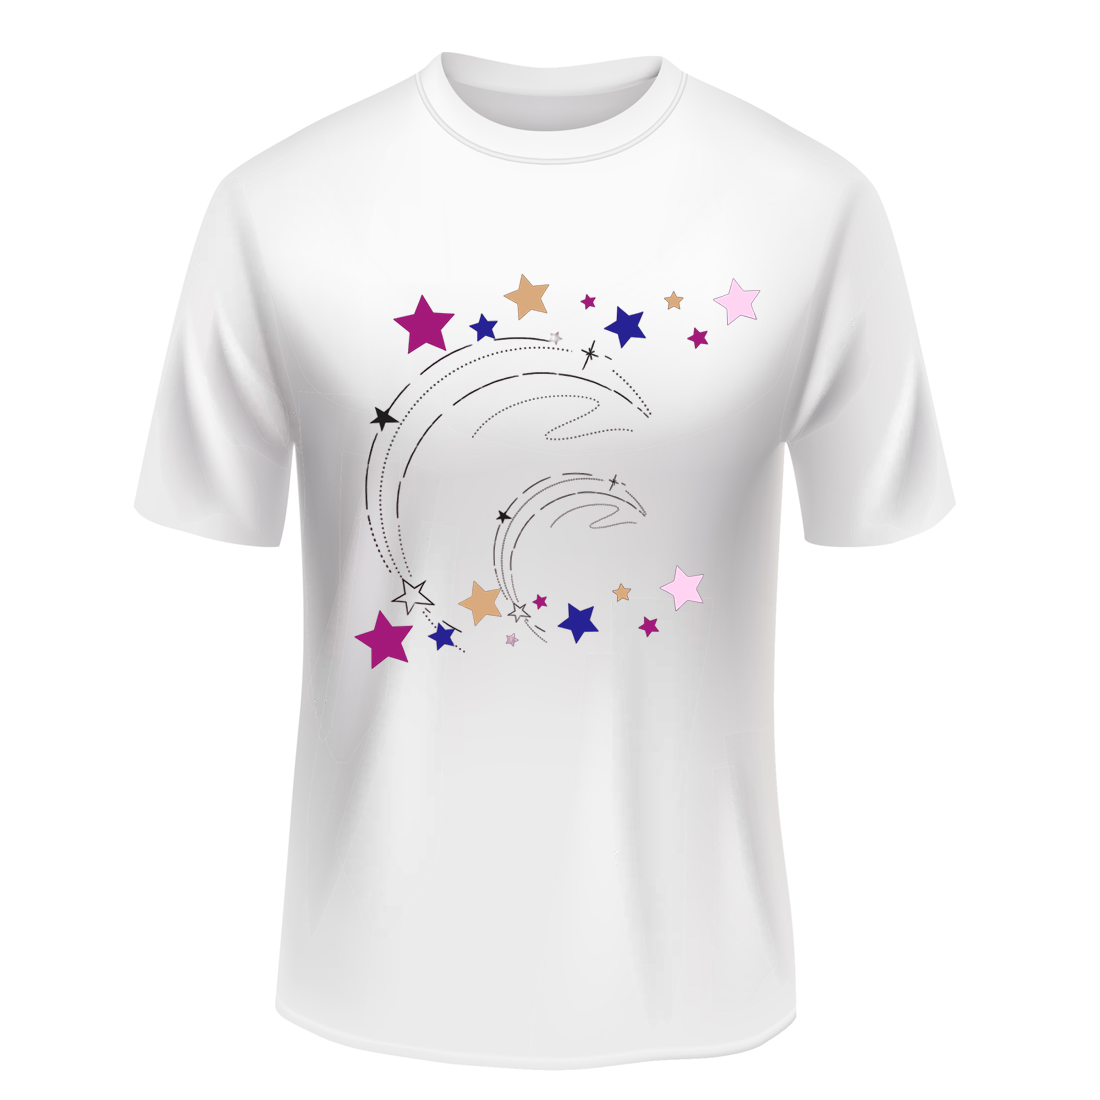 ti shirt design for printing stars front 845